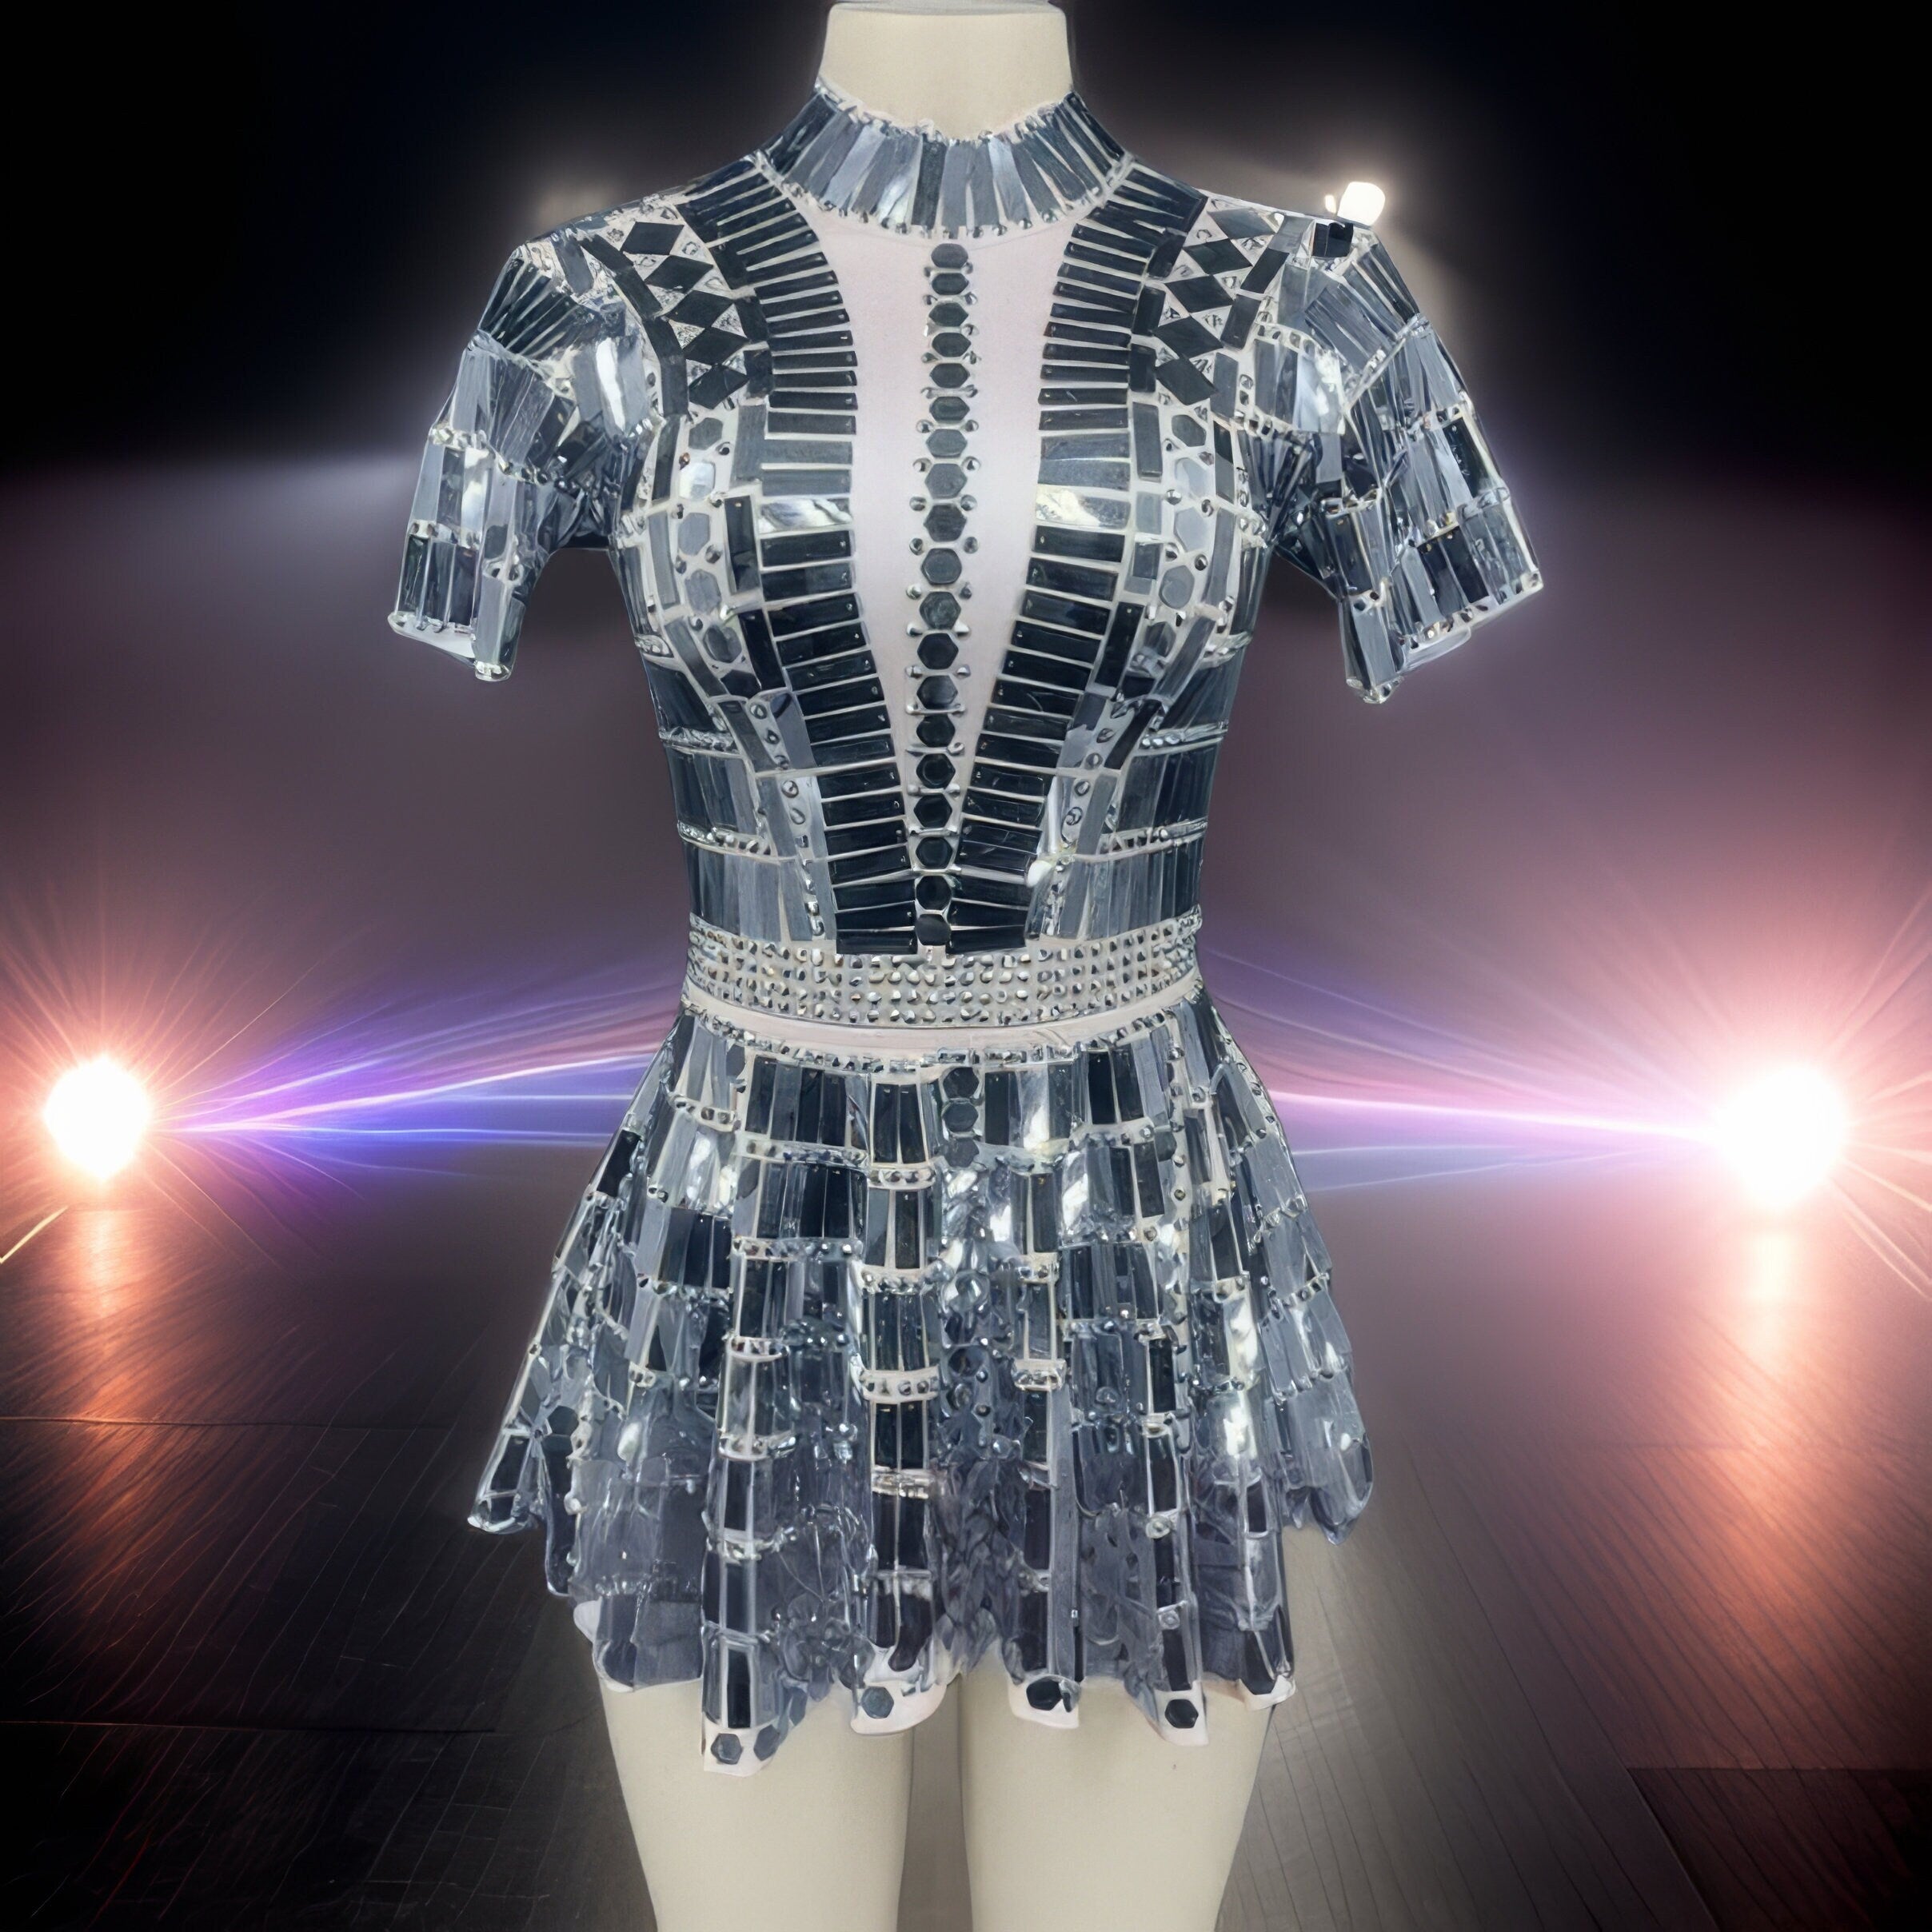 Electra Reflective Sequins Party Dress, Silver leotard & skirt, Futuristic Reflective Festival Outfit, Disco Dance Costume, Mirror Bodysuit